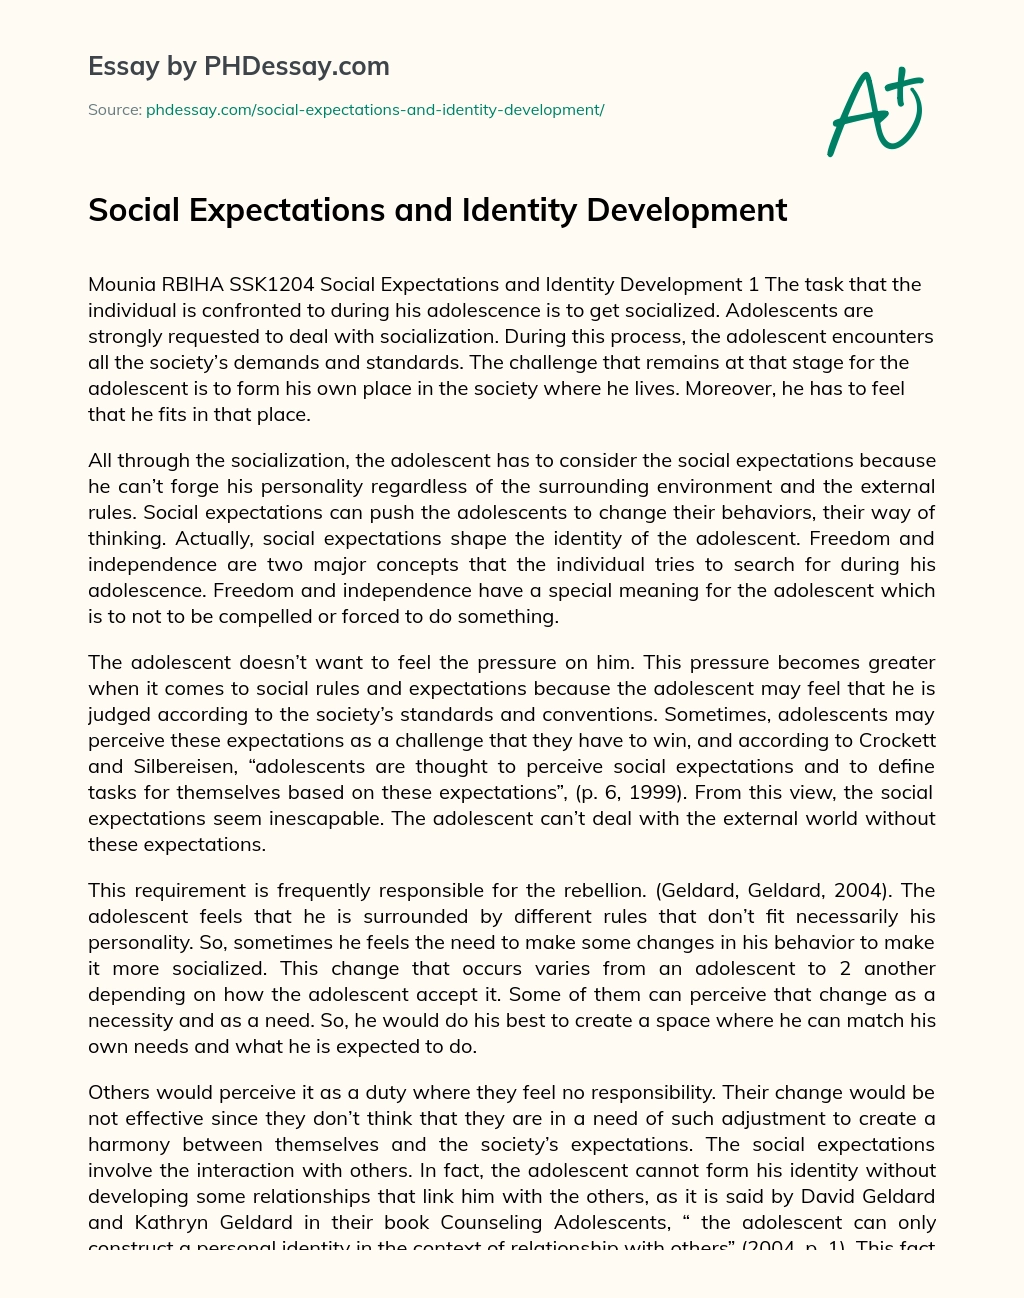 Social Expectations and Identity Development essay